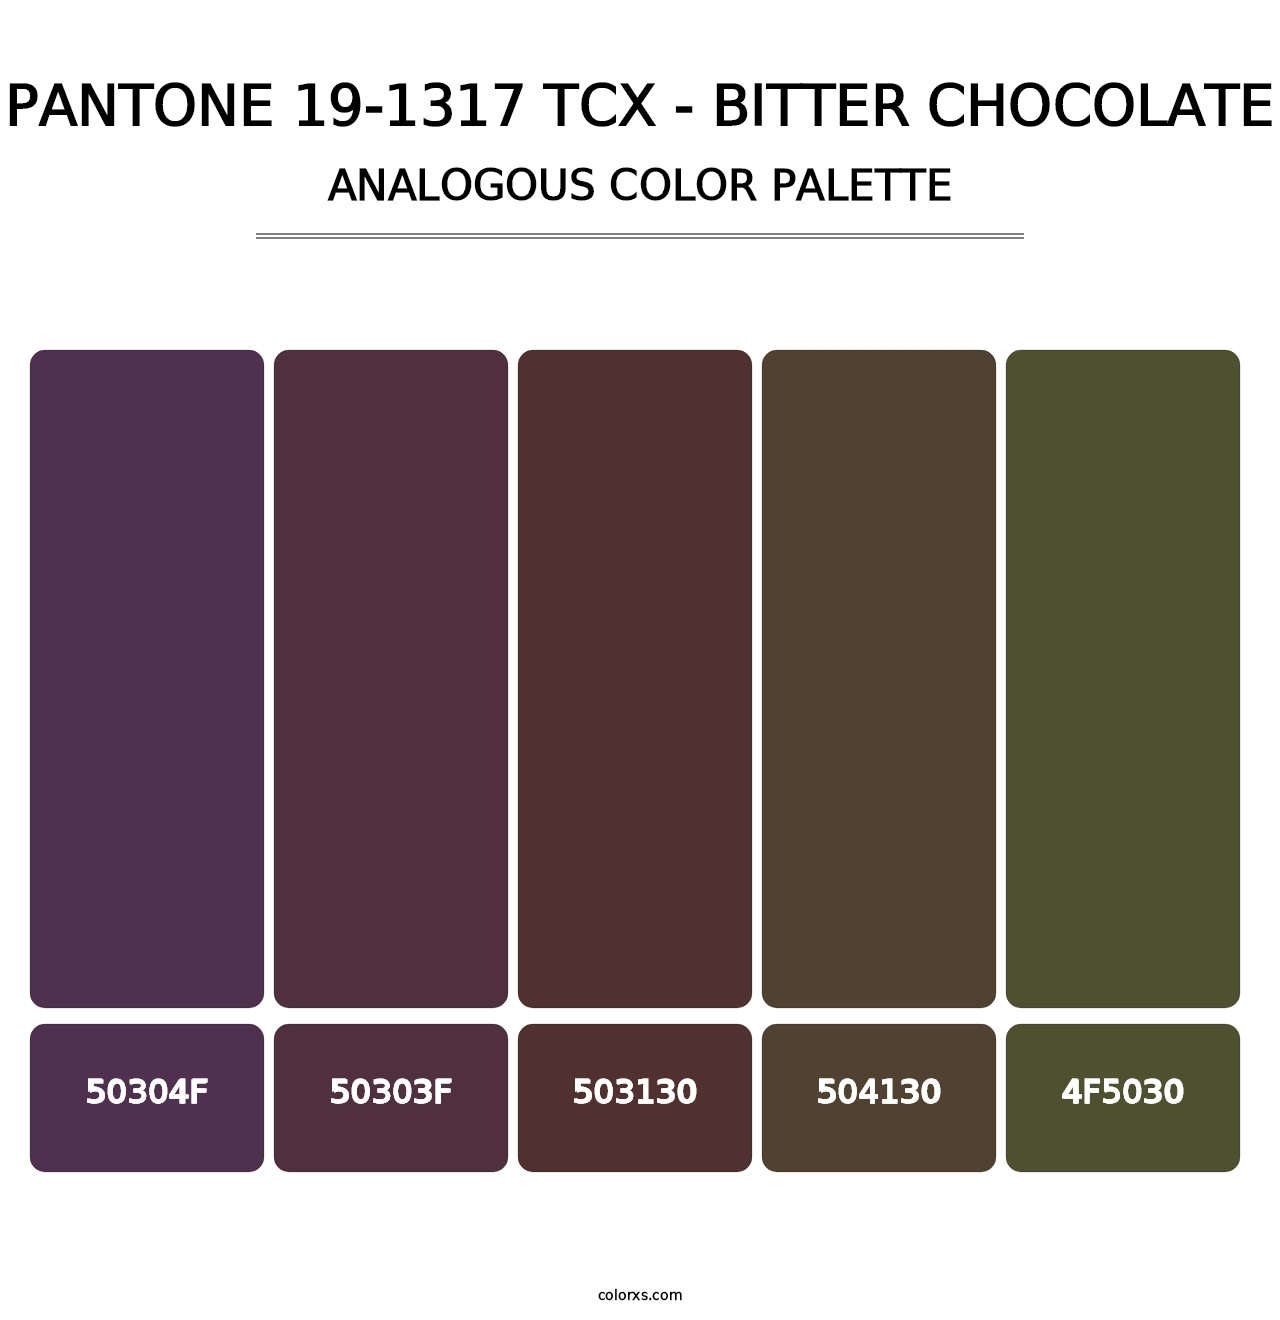 PANTONE 19-1317 TCX - Bitter Chocolate - Analogous Color Palette